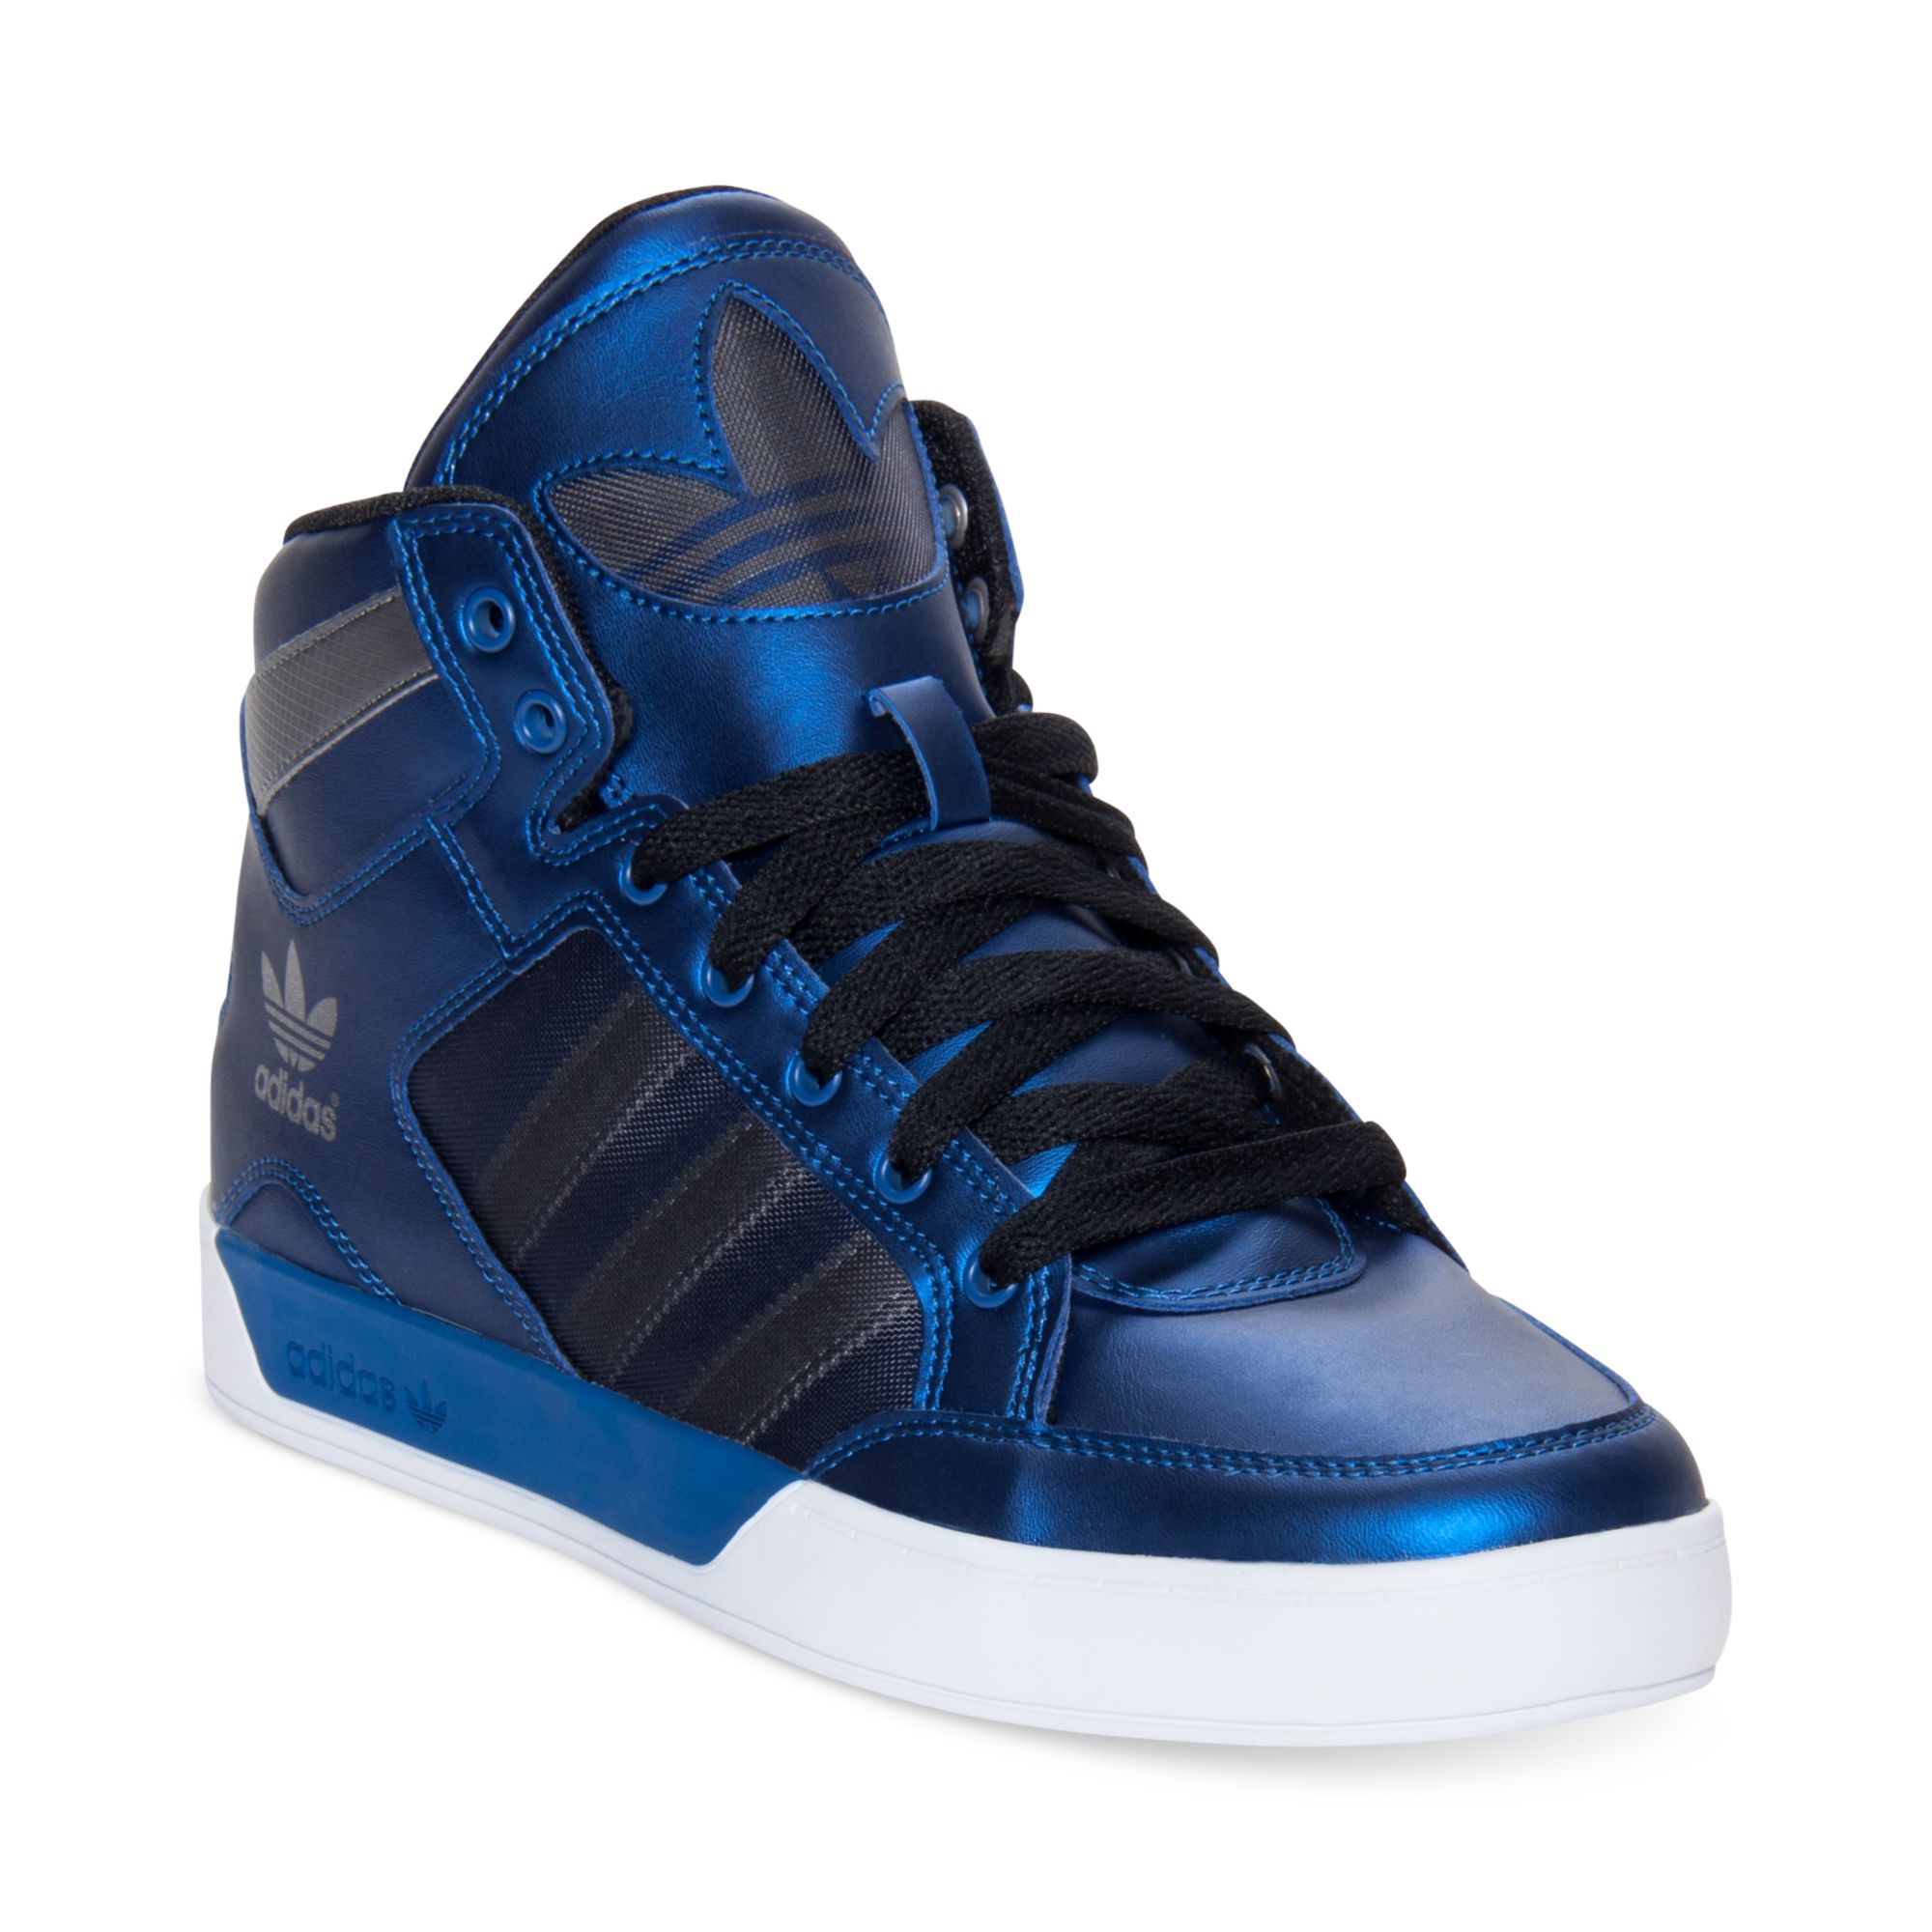 adidas Originals Hardcourt Hi Casual Sneakers in Blue for Men - Lyst